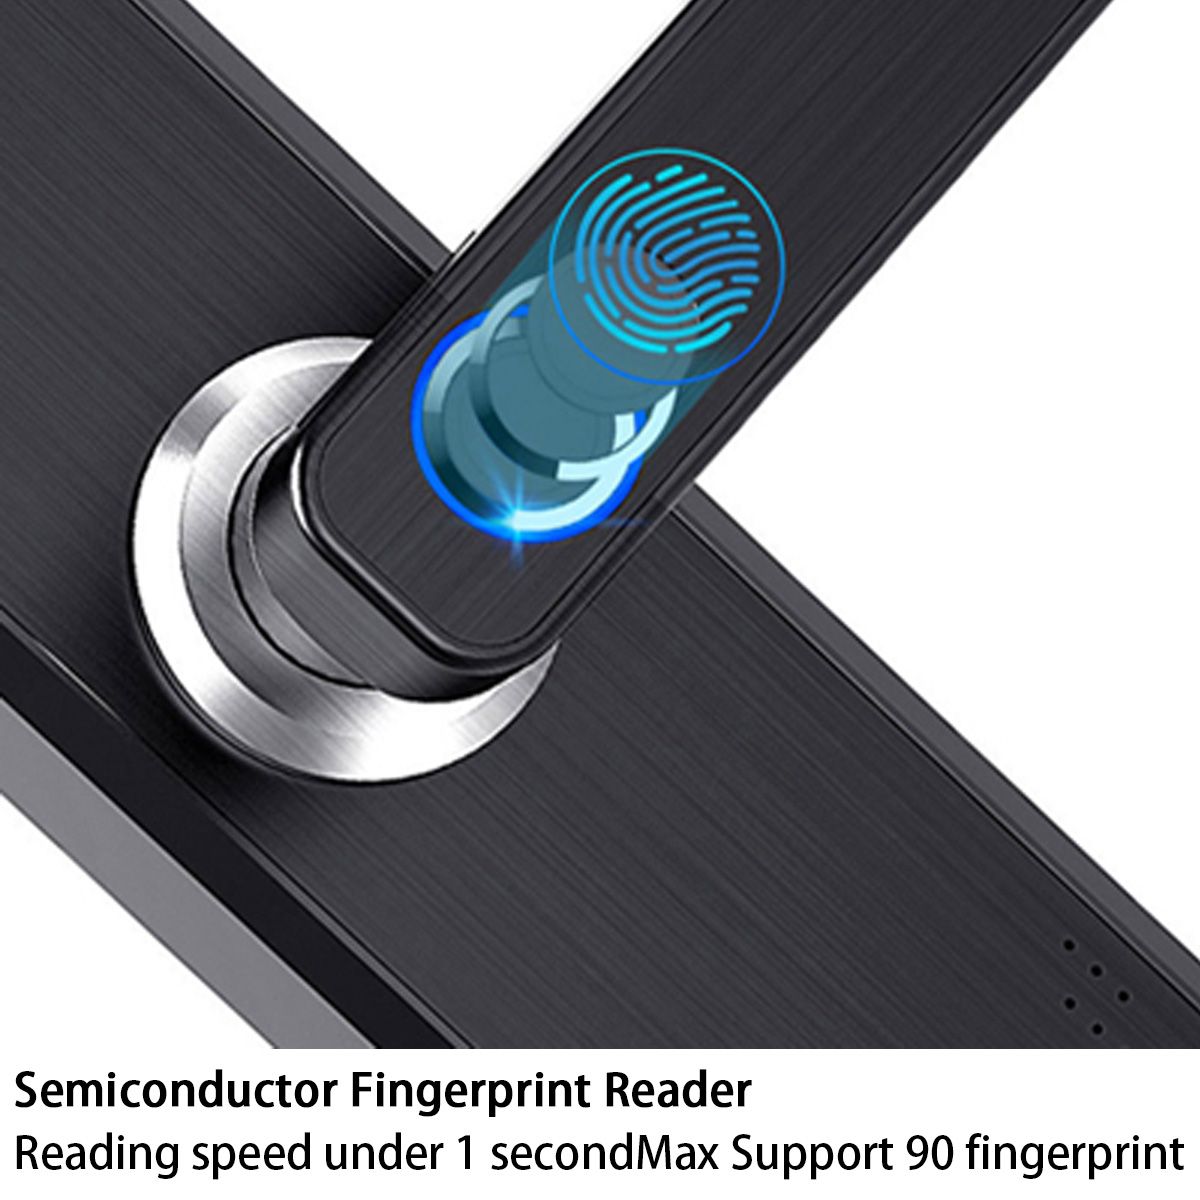 Electronic-Smart-Door-Lock-Biometric-Fingerprint--Digital-Code-Smart-Card-Key-1557721